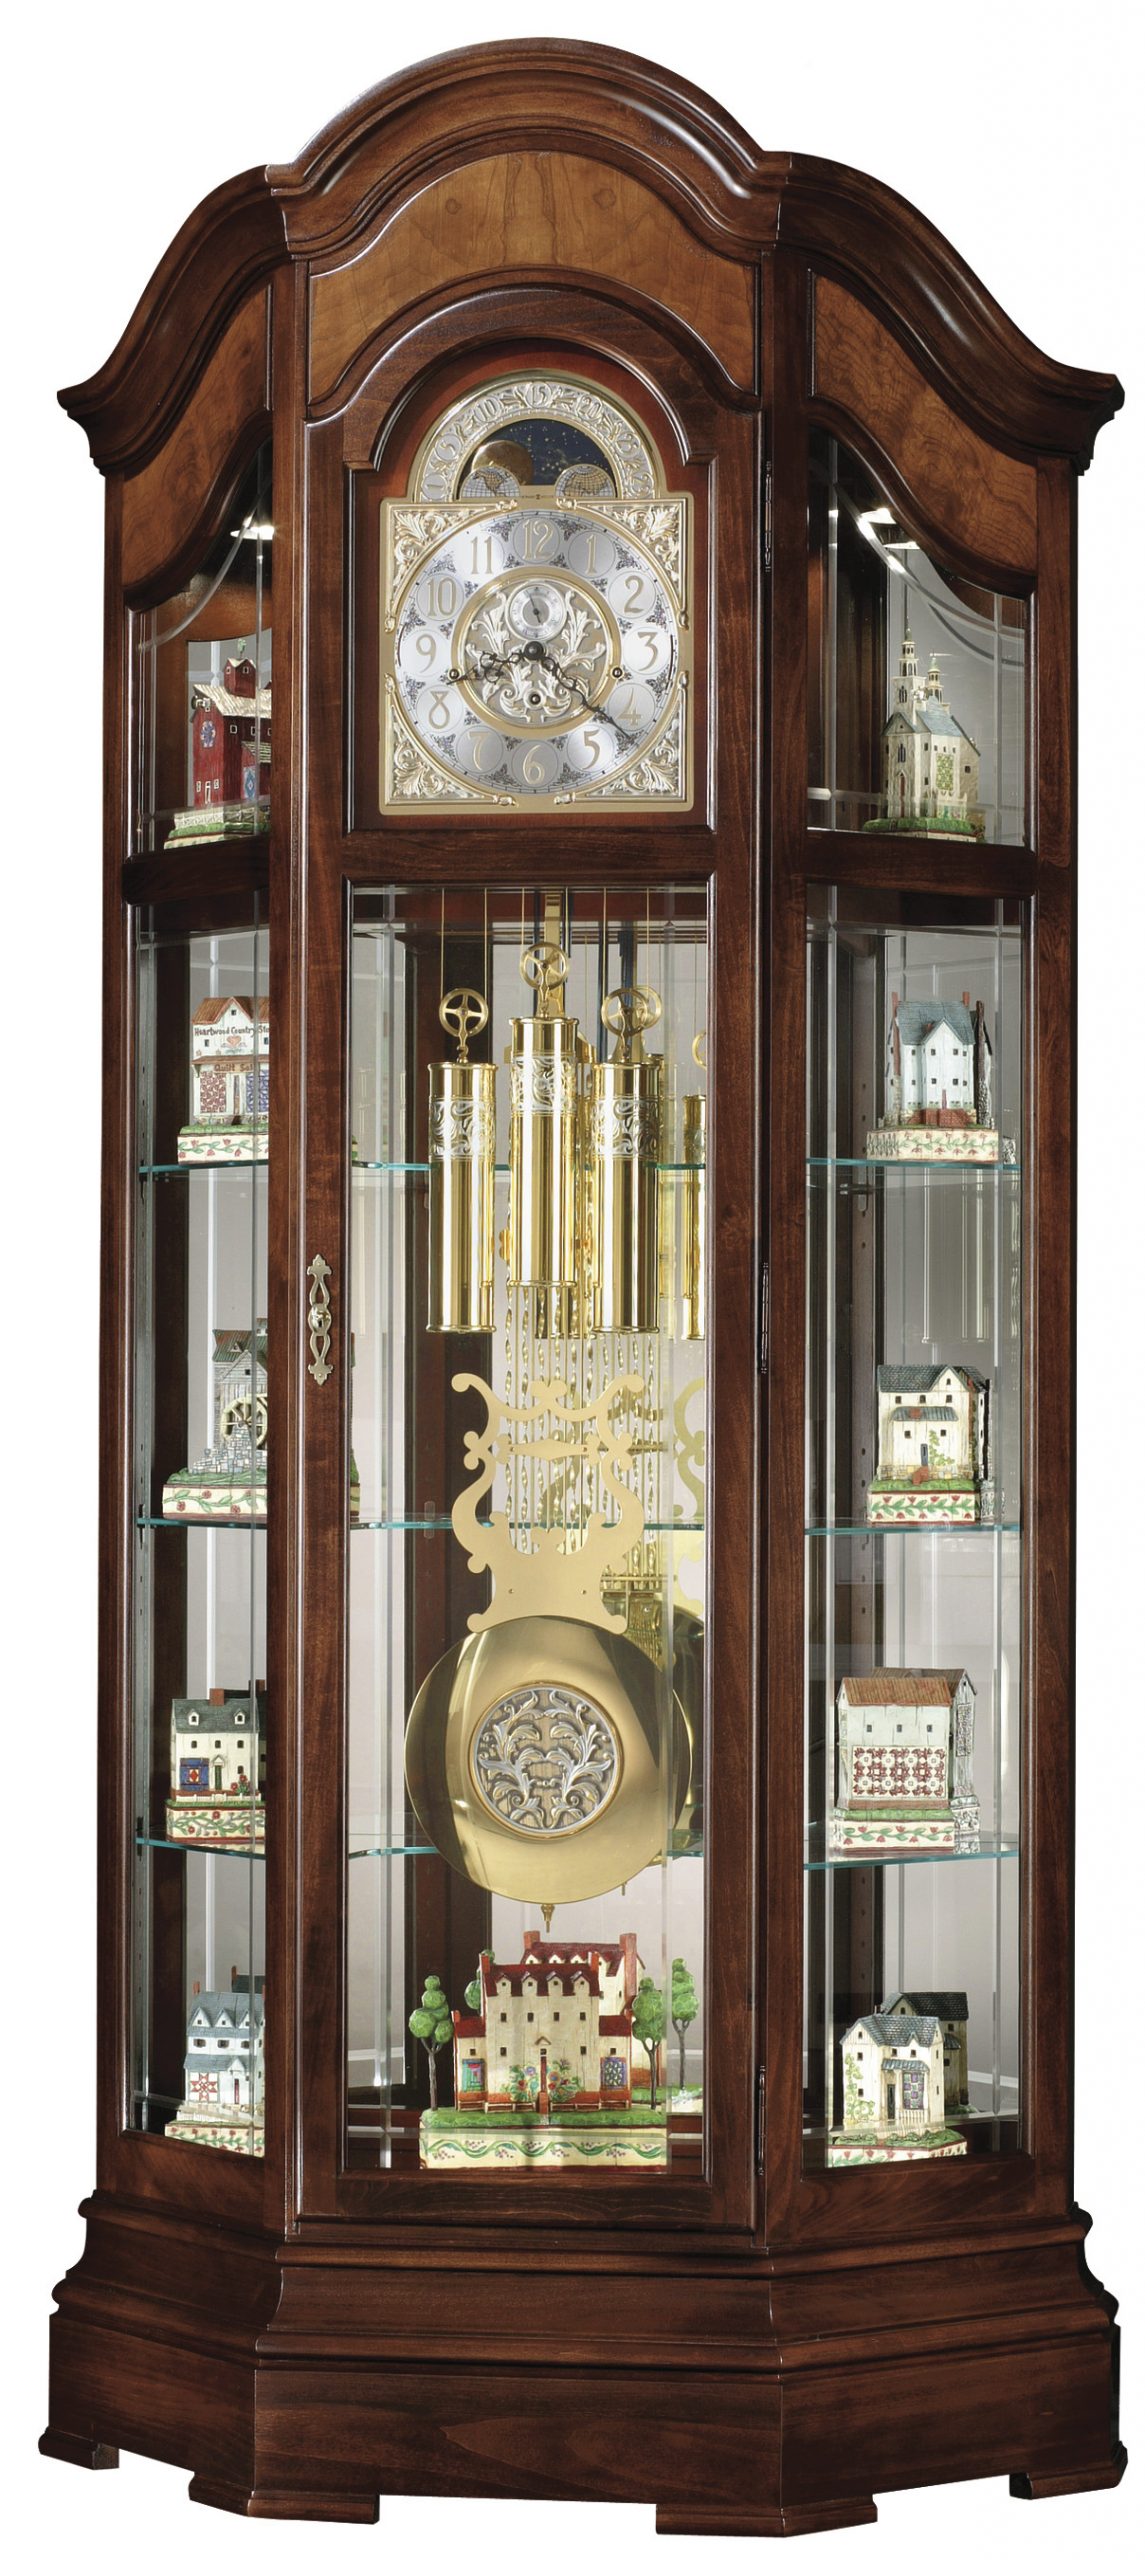 610-939 Majestic II grandfather clock by Howard Miller - Big Ben